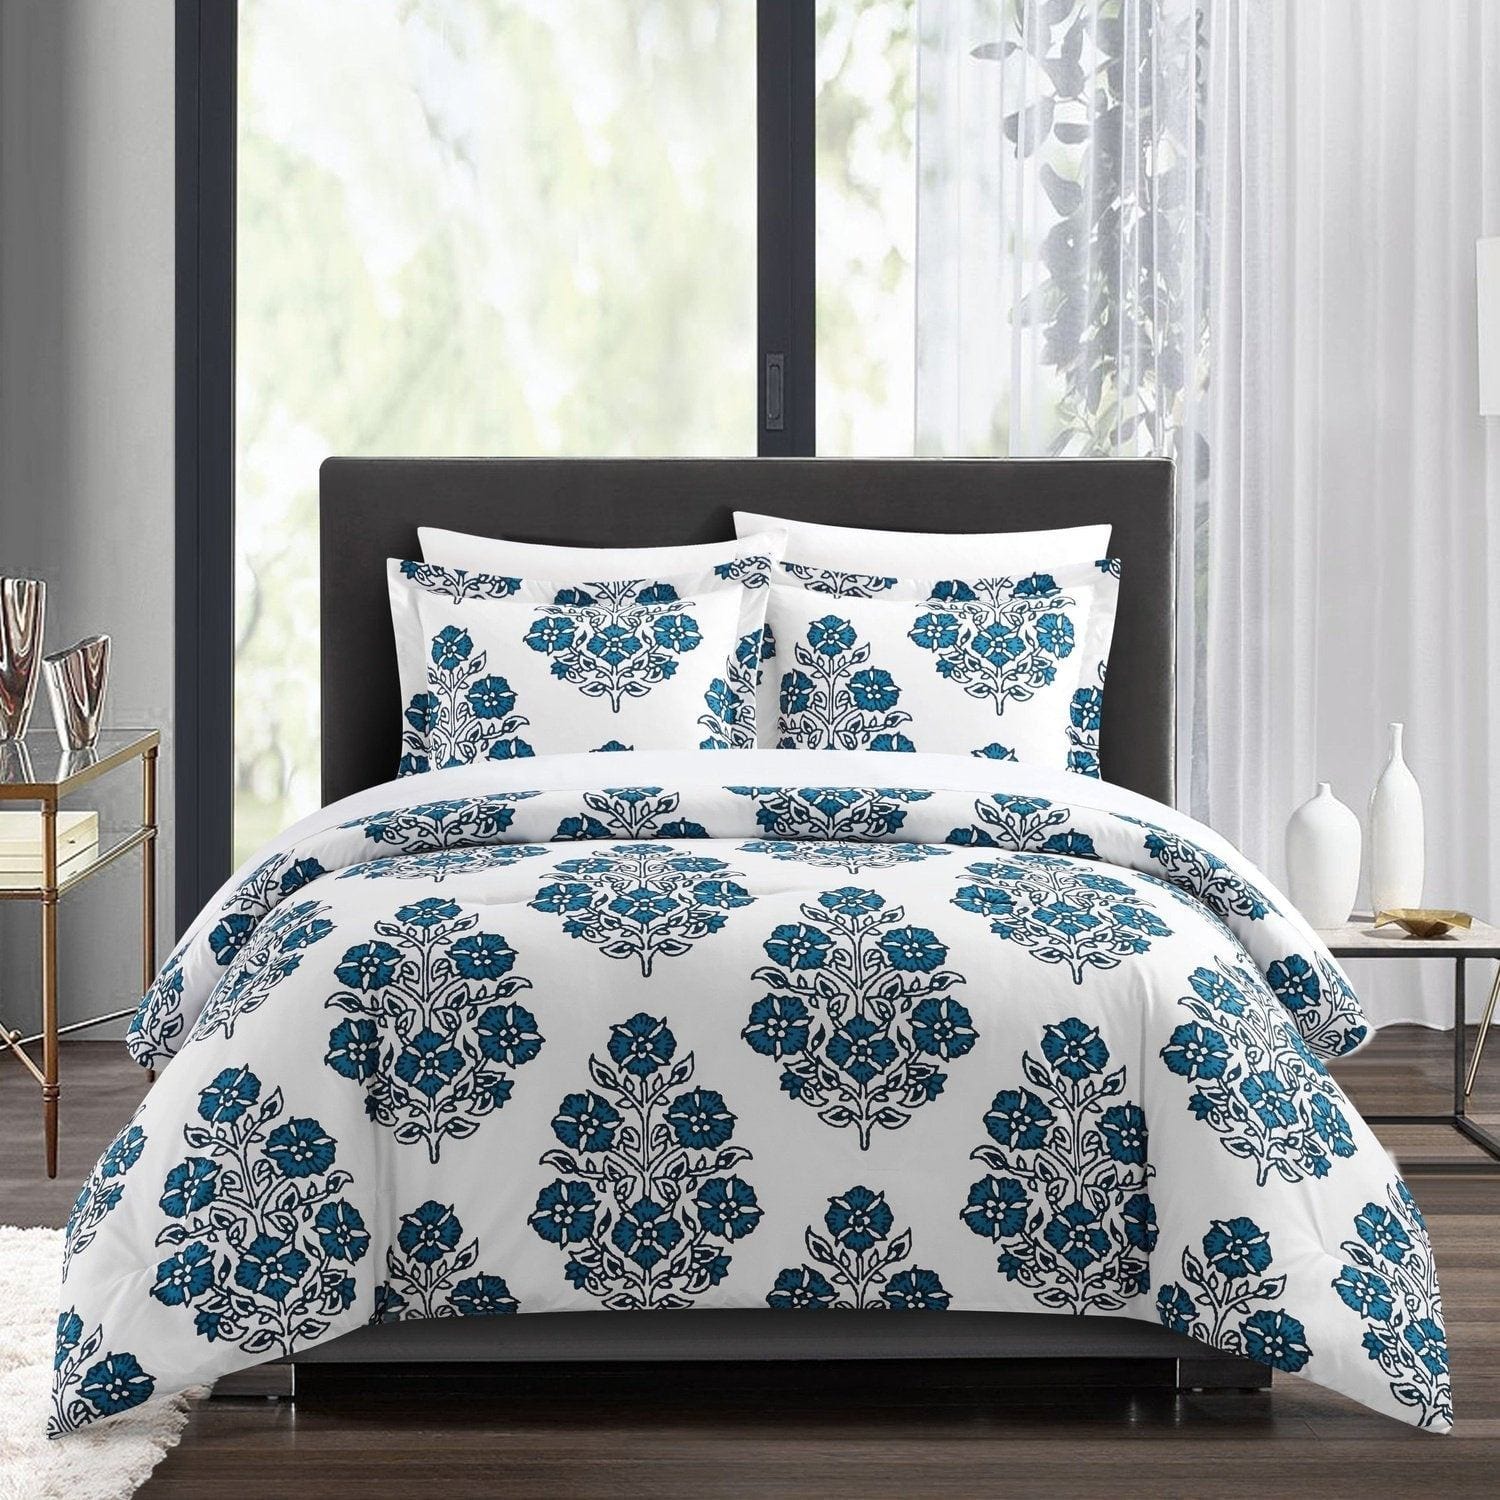 Floral-print duvet cover king bed - Home